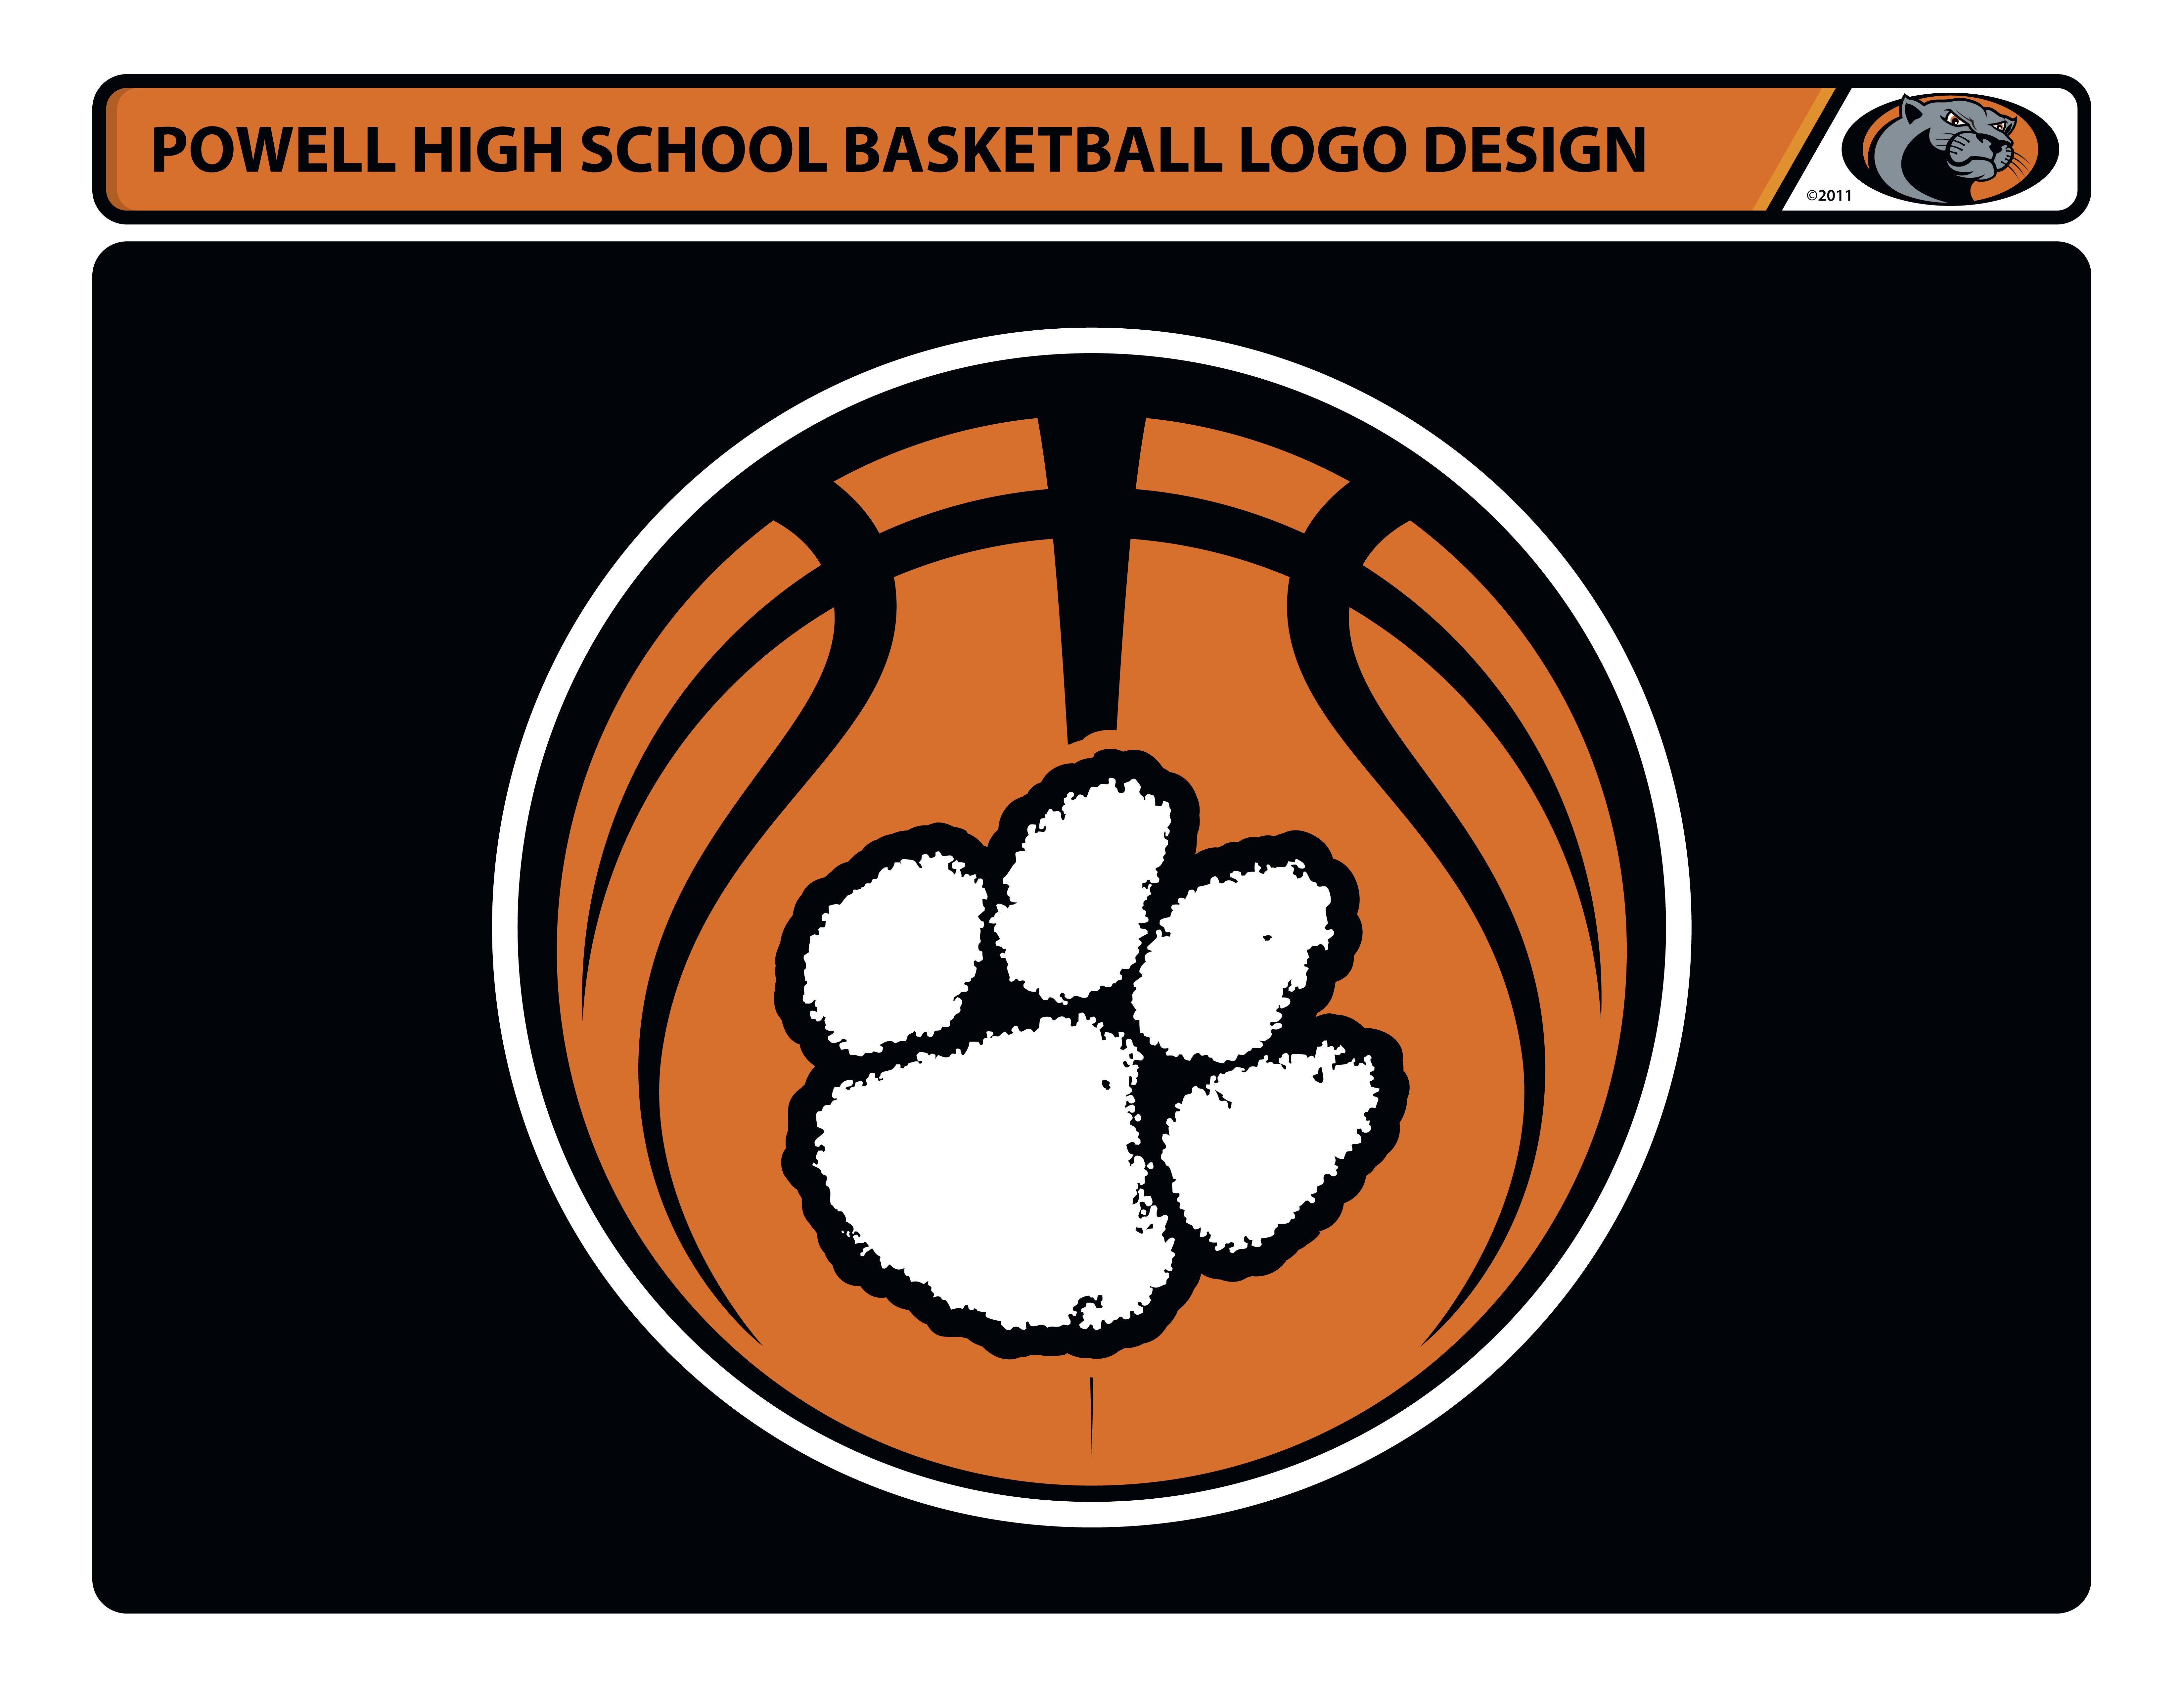 Bulldog Basketball Logo - Powell High School Basketball Logo Design | Digital Portfolio